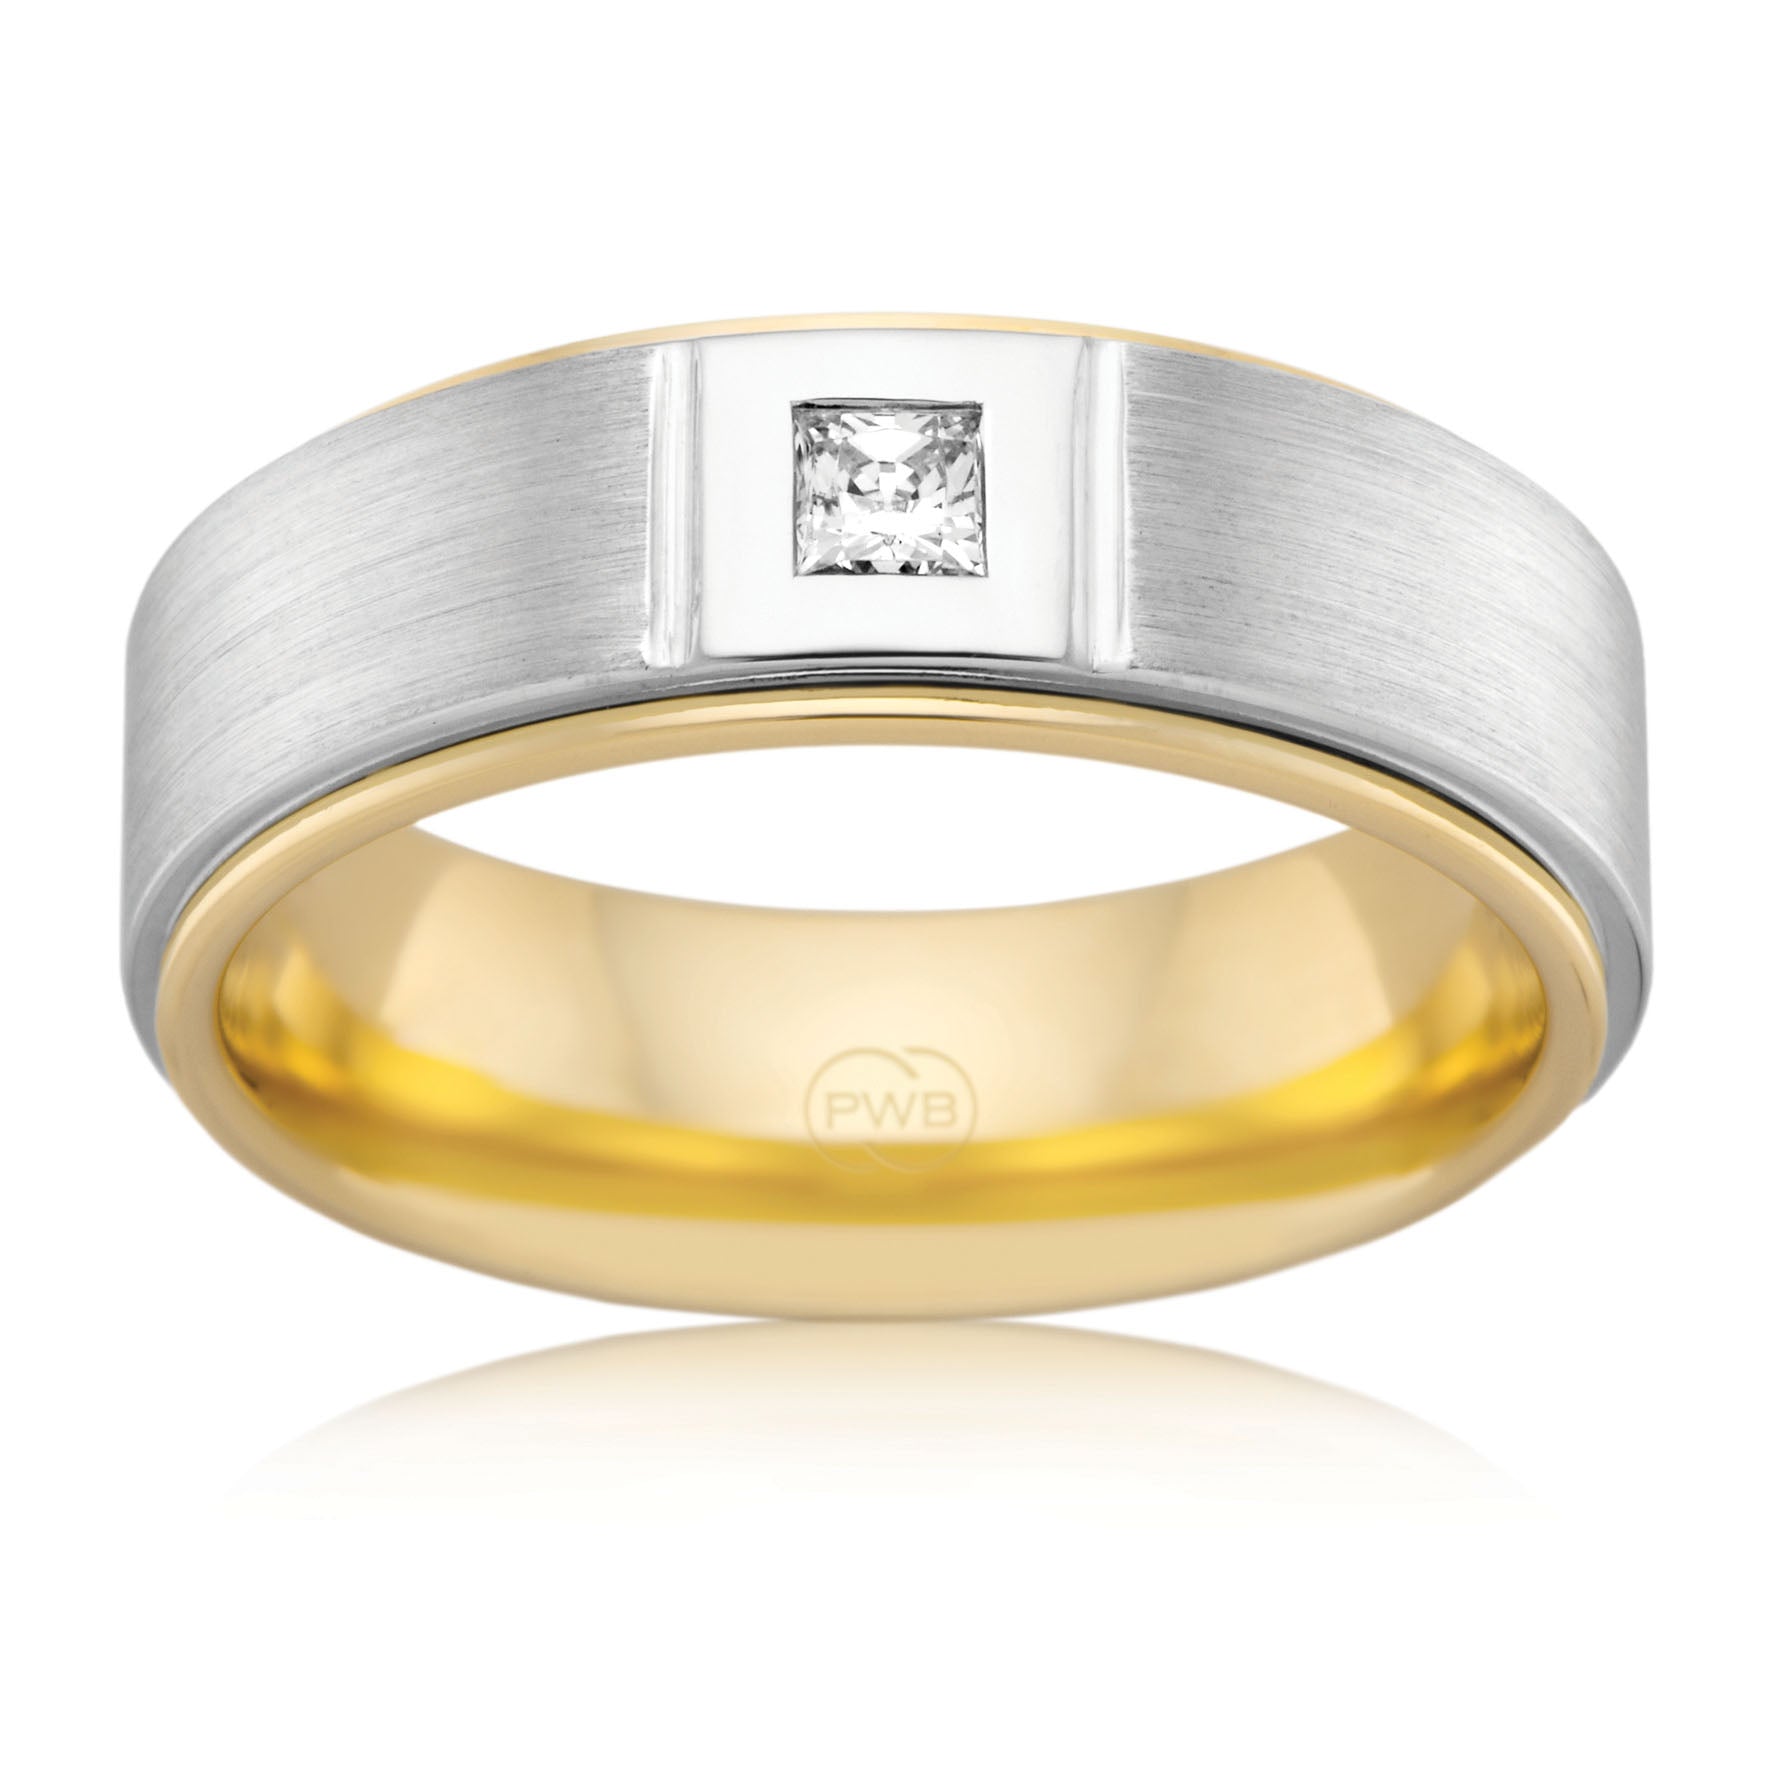 Two-tone Gents Wedding Ring with 0.15 carat Princess-cut Diamond.